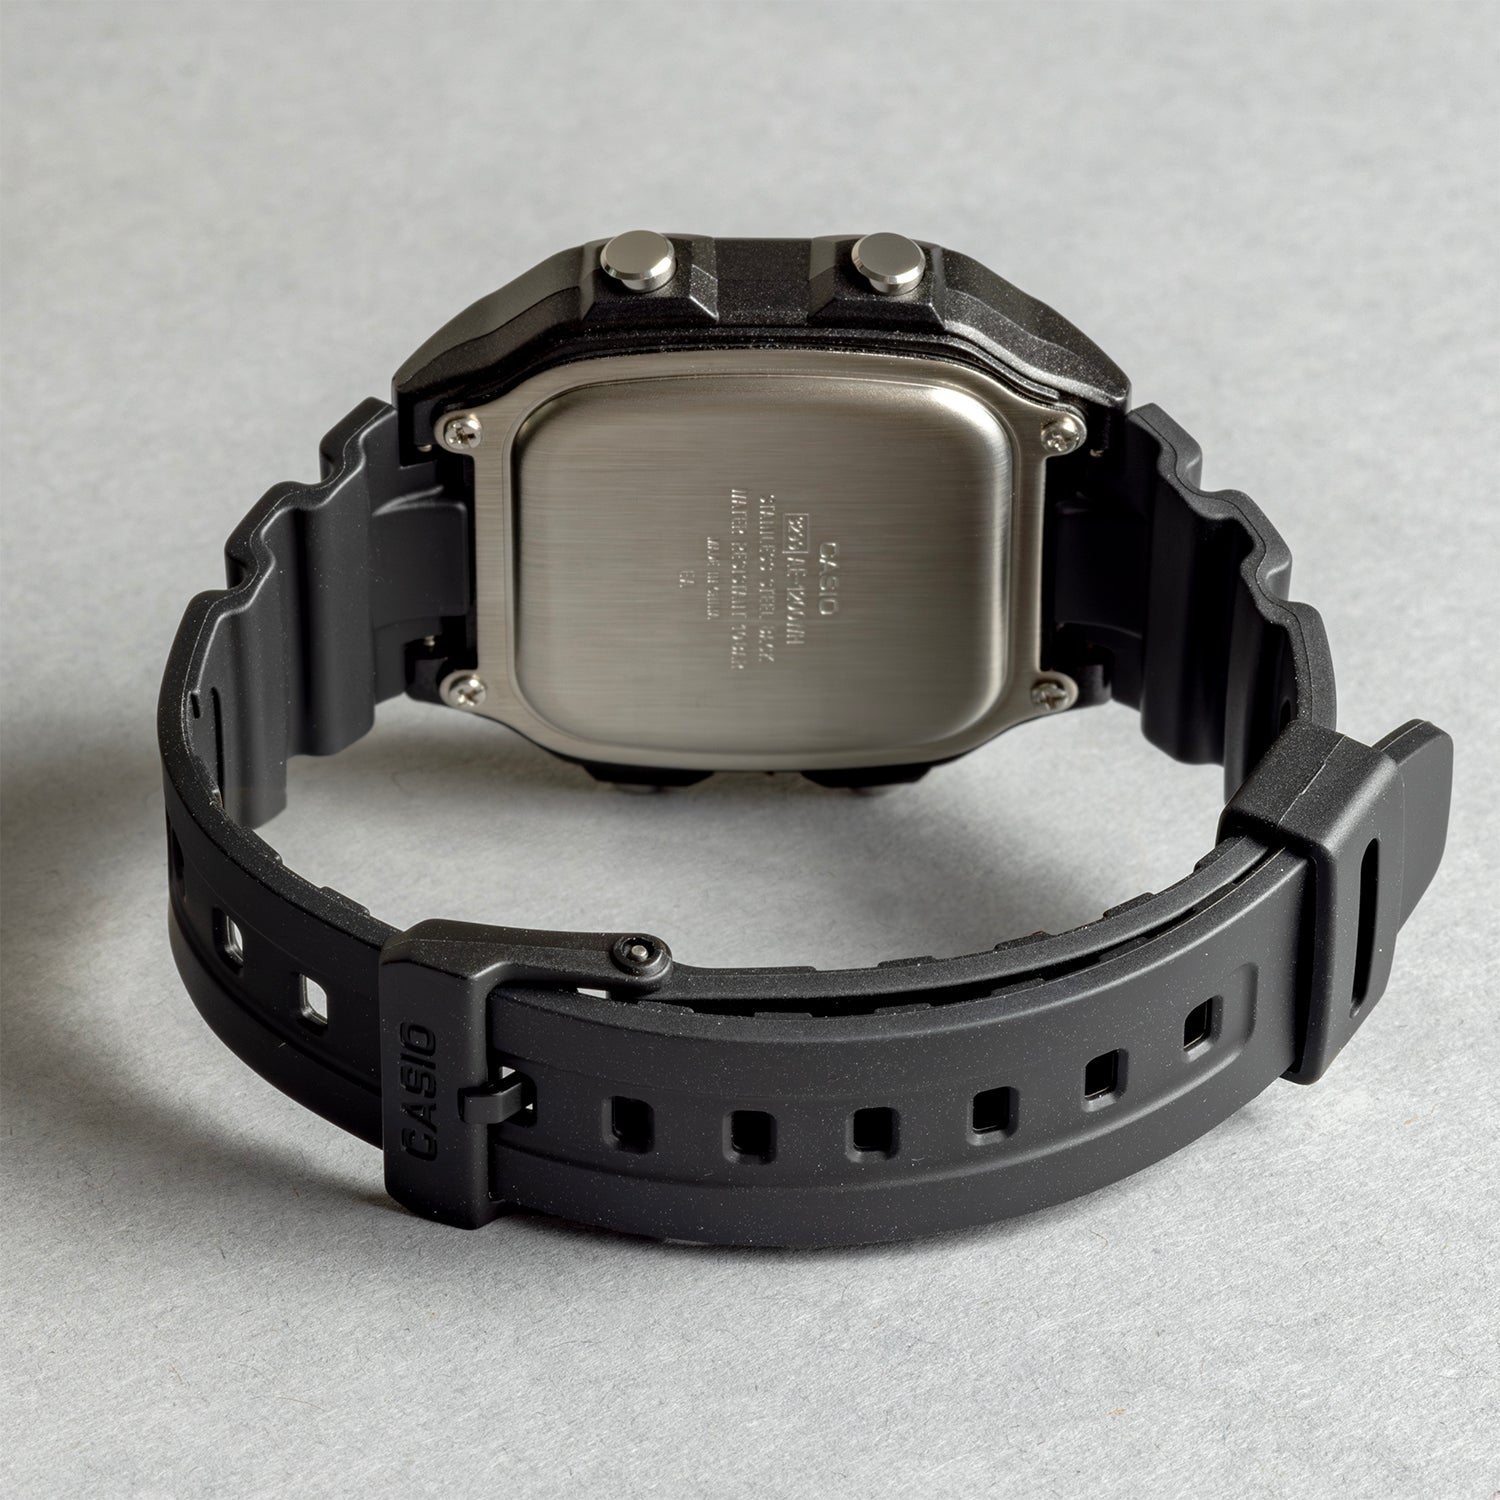 CASIO (カシオ) 腕時計 デジタル AE-1200WH-1A メンズ 海外モデル [並行輸入品]